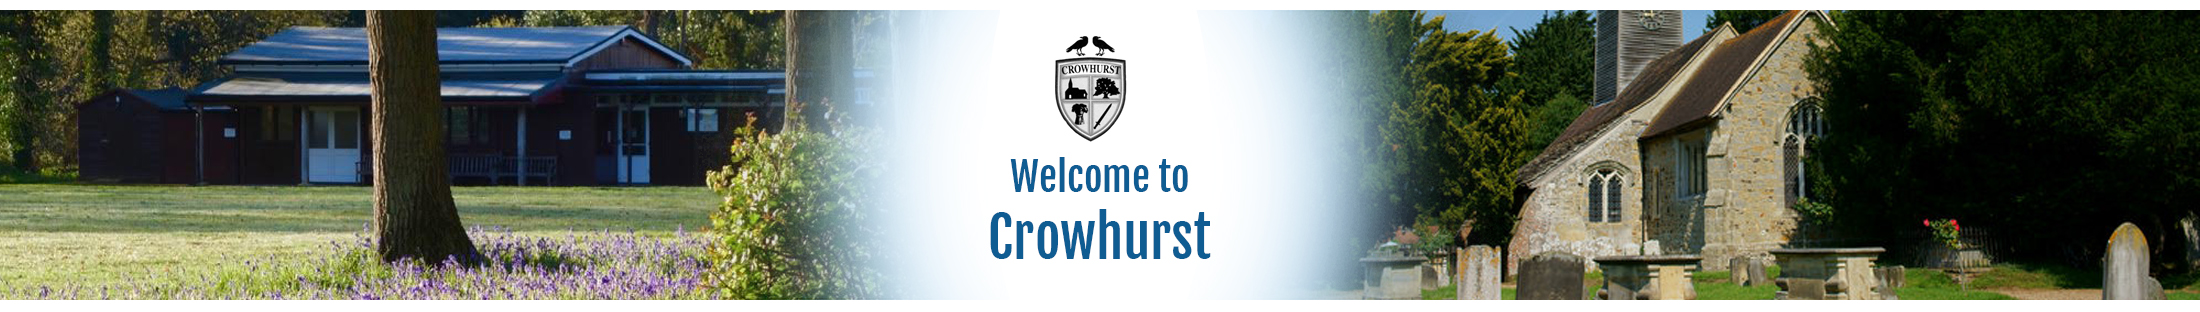 Header Image for Crowhurst Parish Council